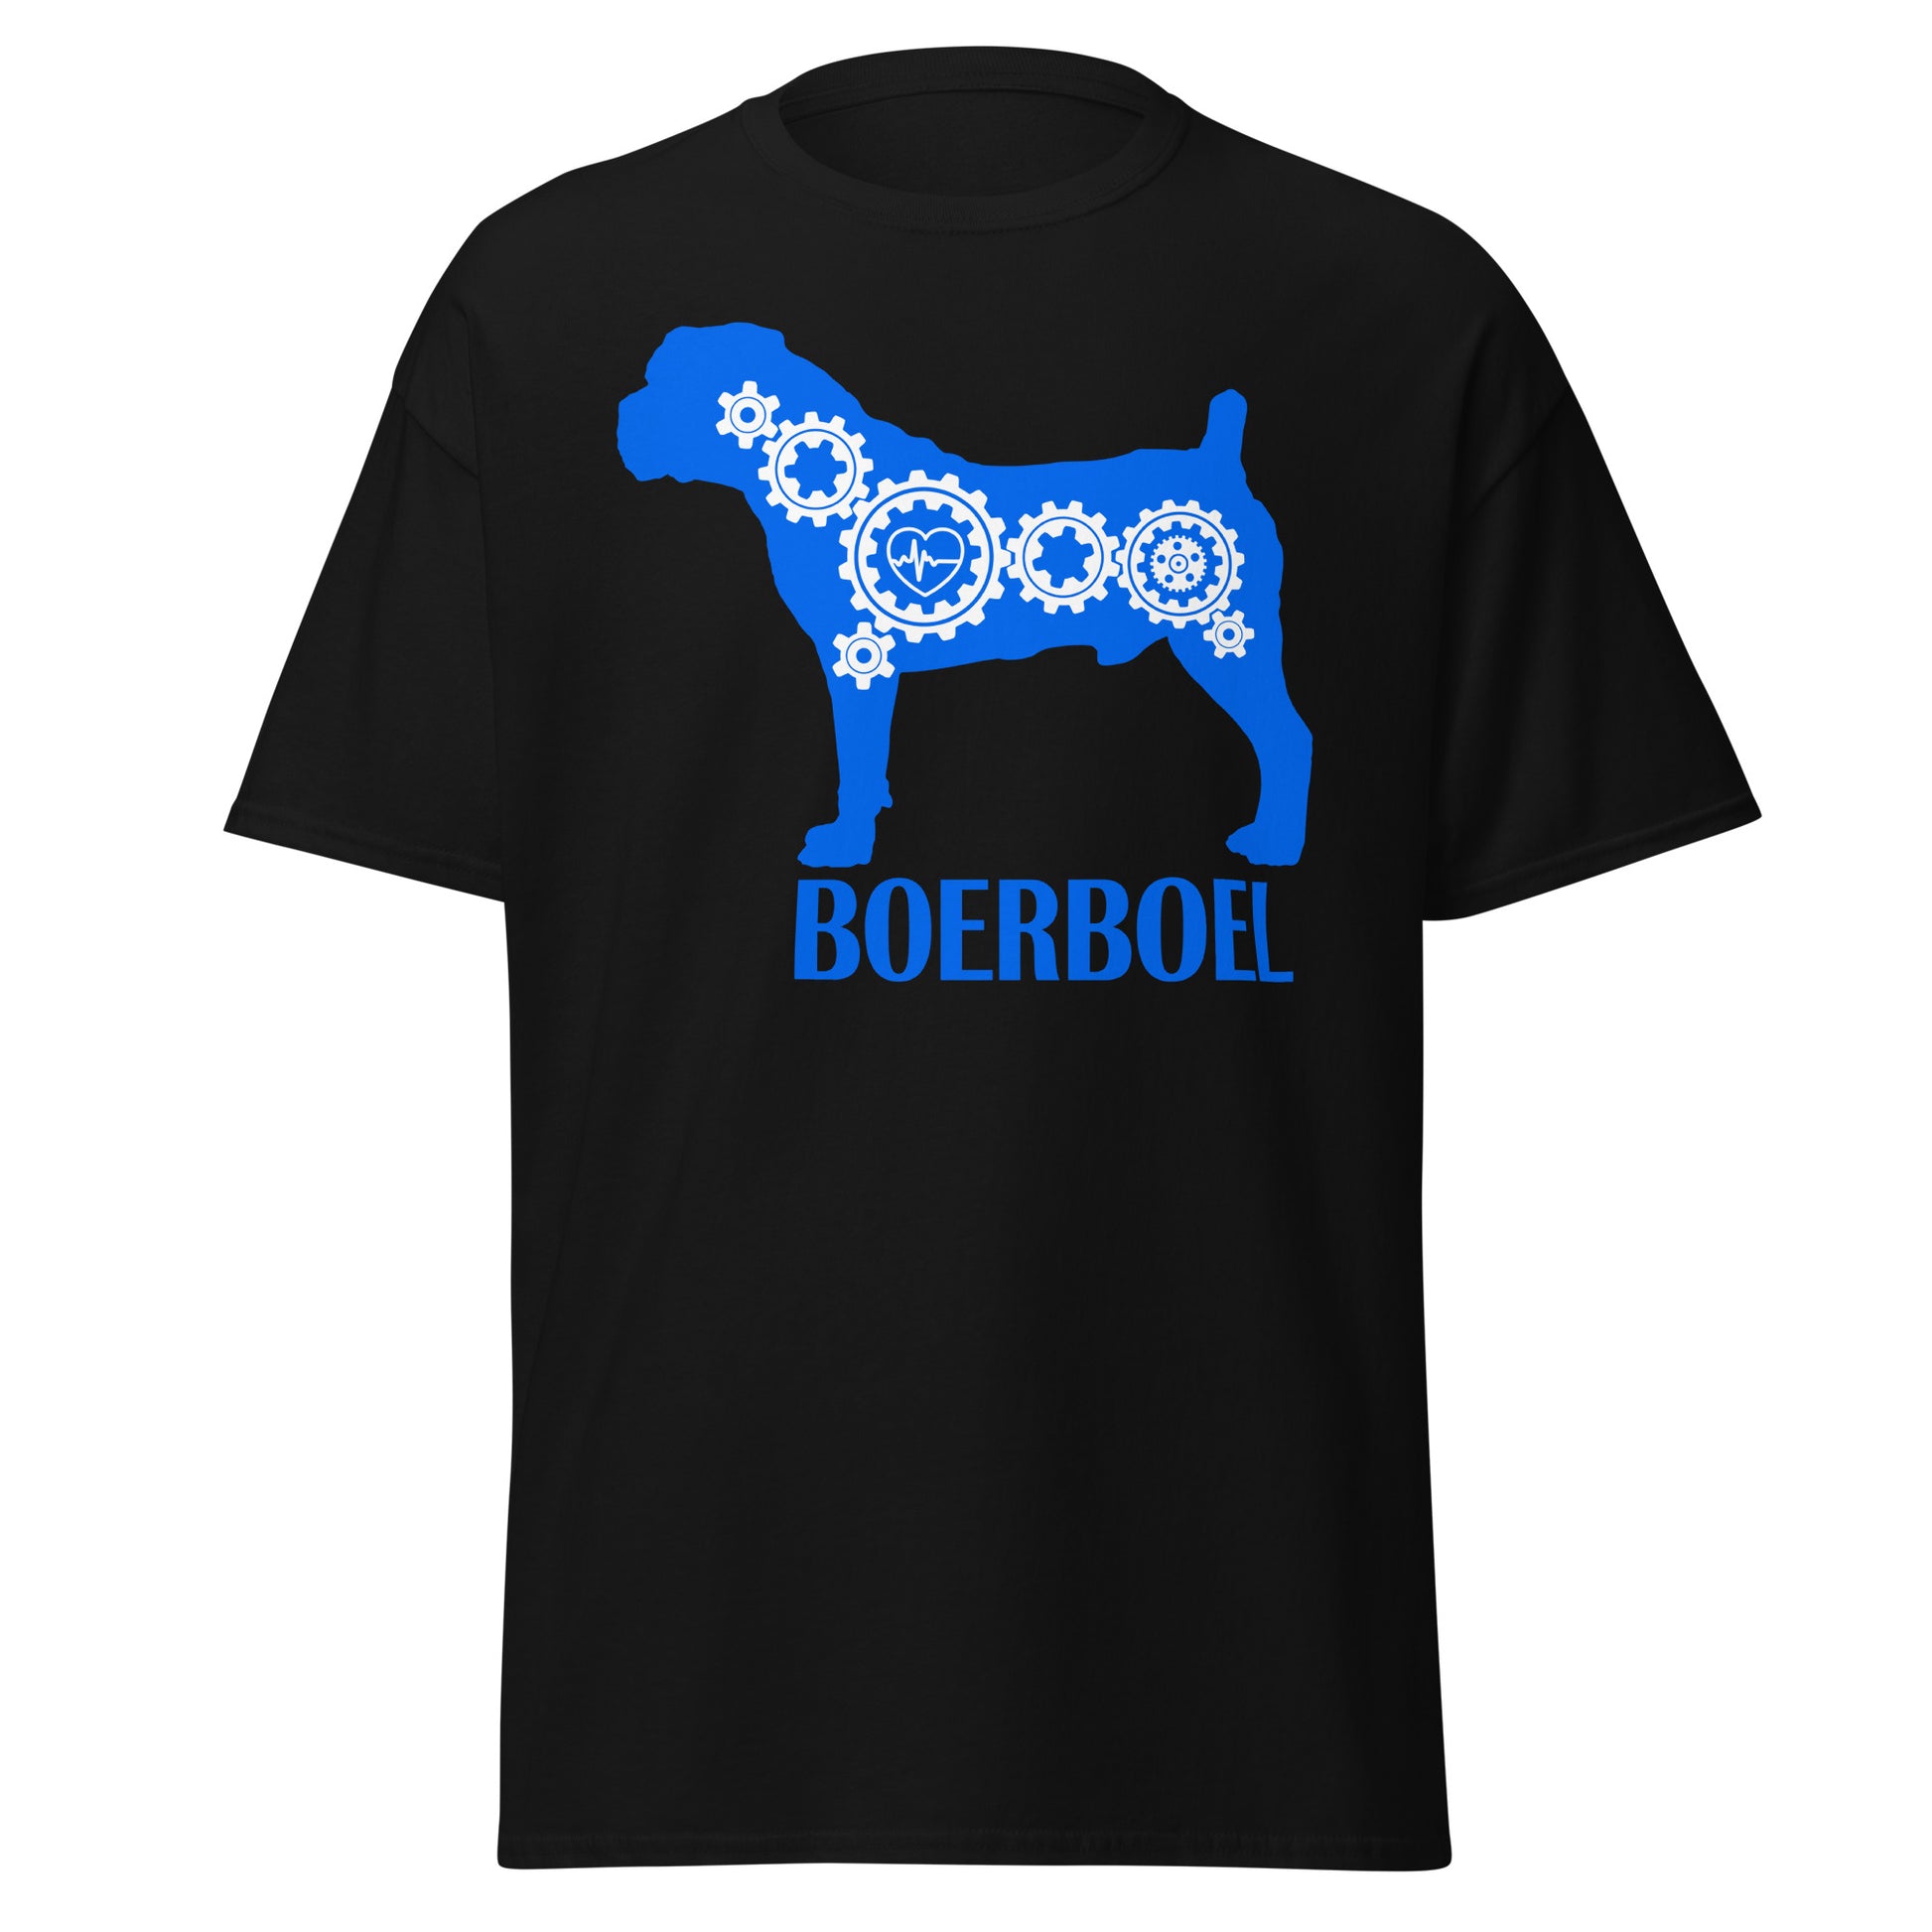 Boerboel Bionic men’s black t-shirt by Dog Artistry.